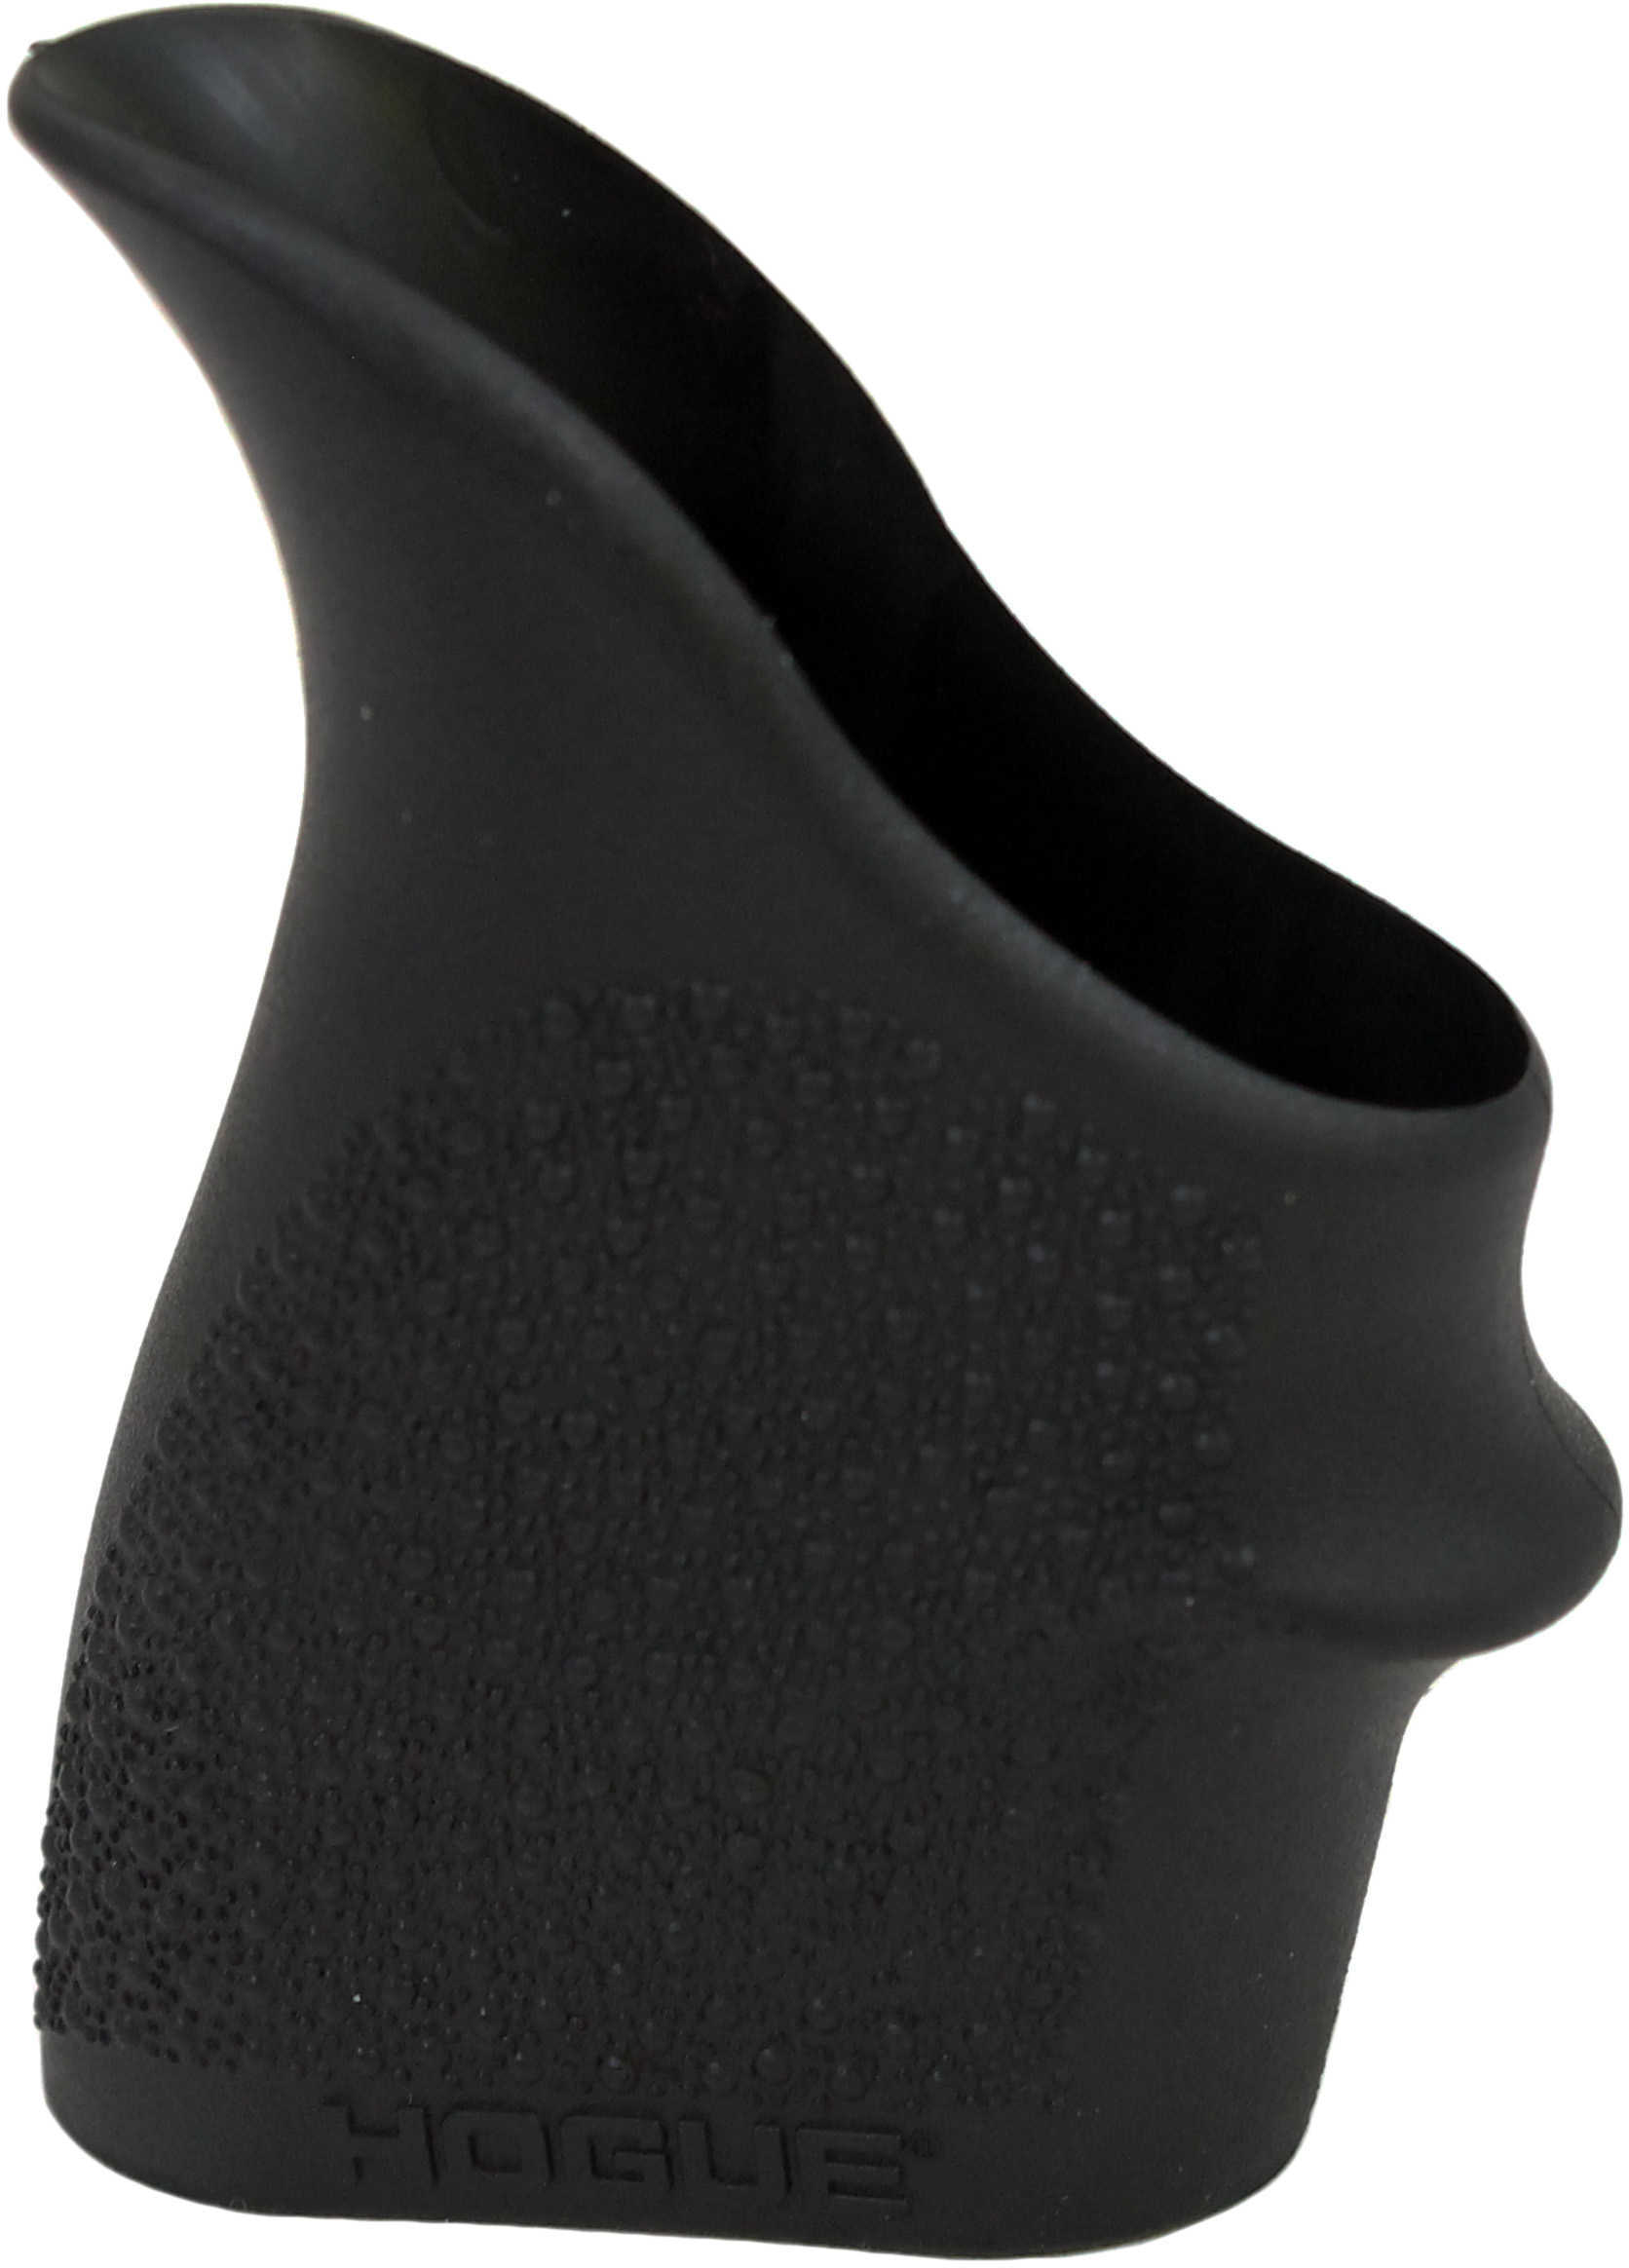 Hogue 18300 HandAll Grip Sleeve S&W Shield 45/Kahr P9/P40/CW9/CW40 Blk